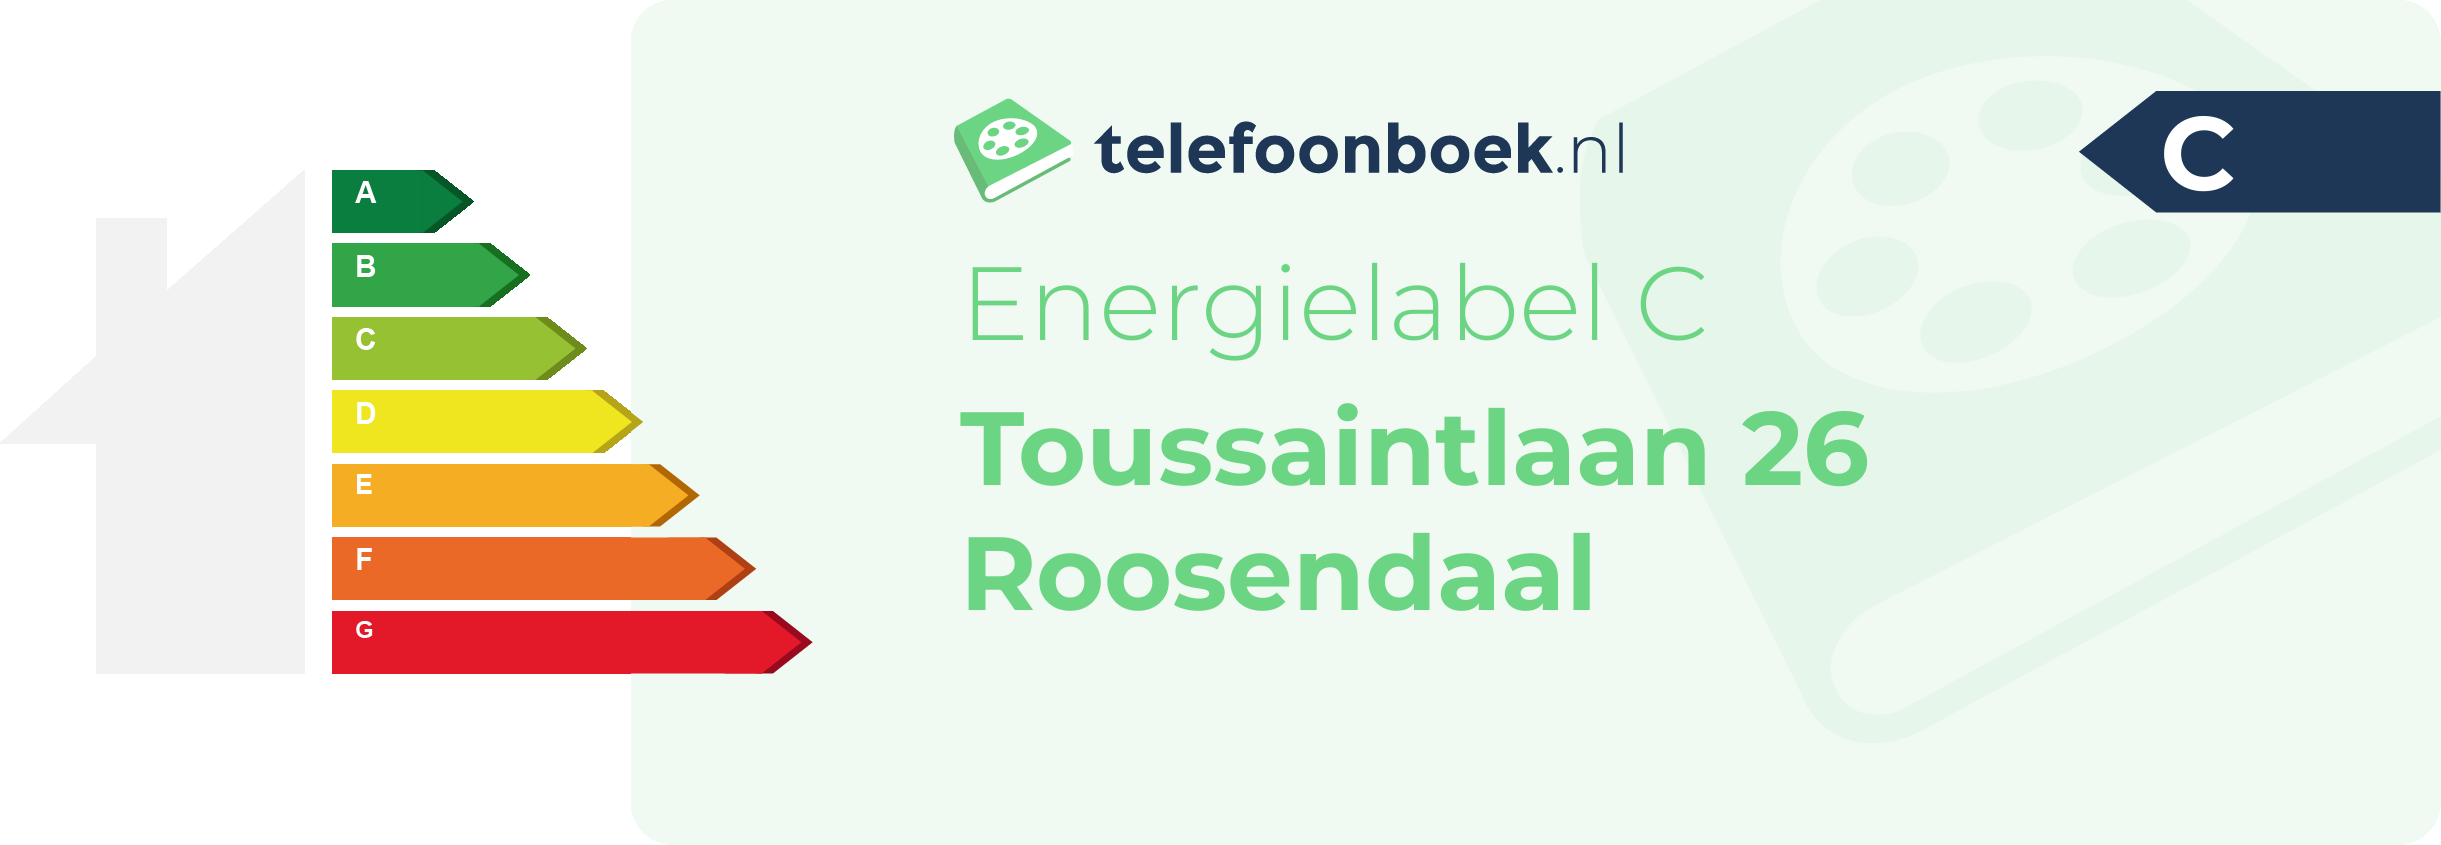 Energielabel Toussaintlaan 26 Roosendaal